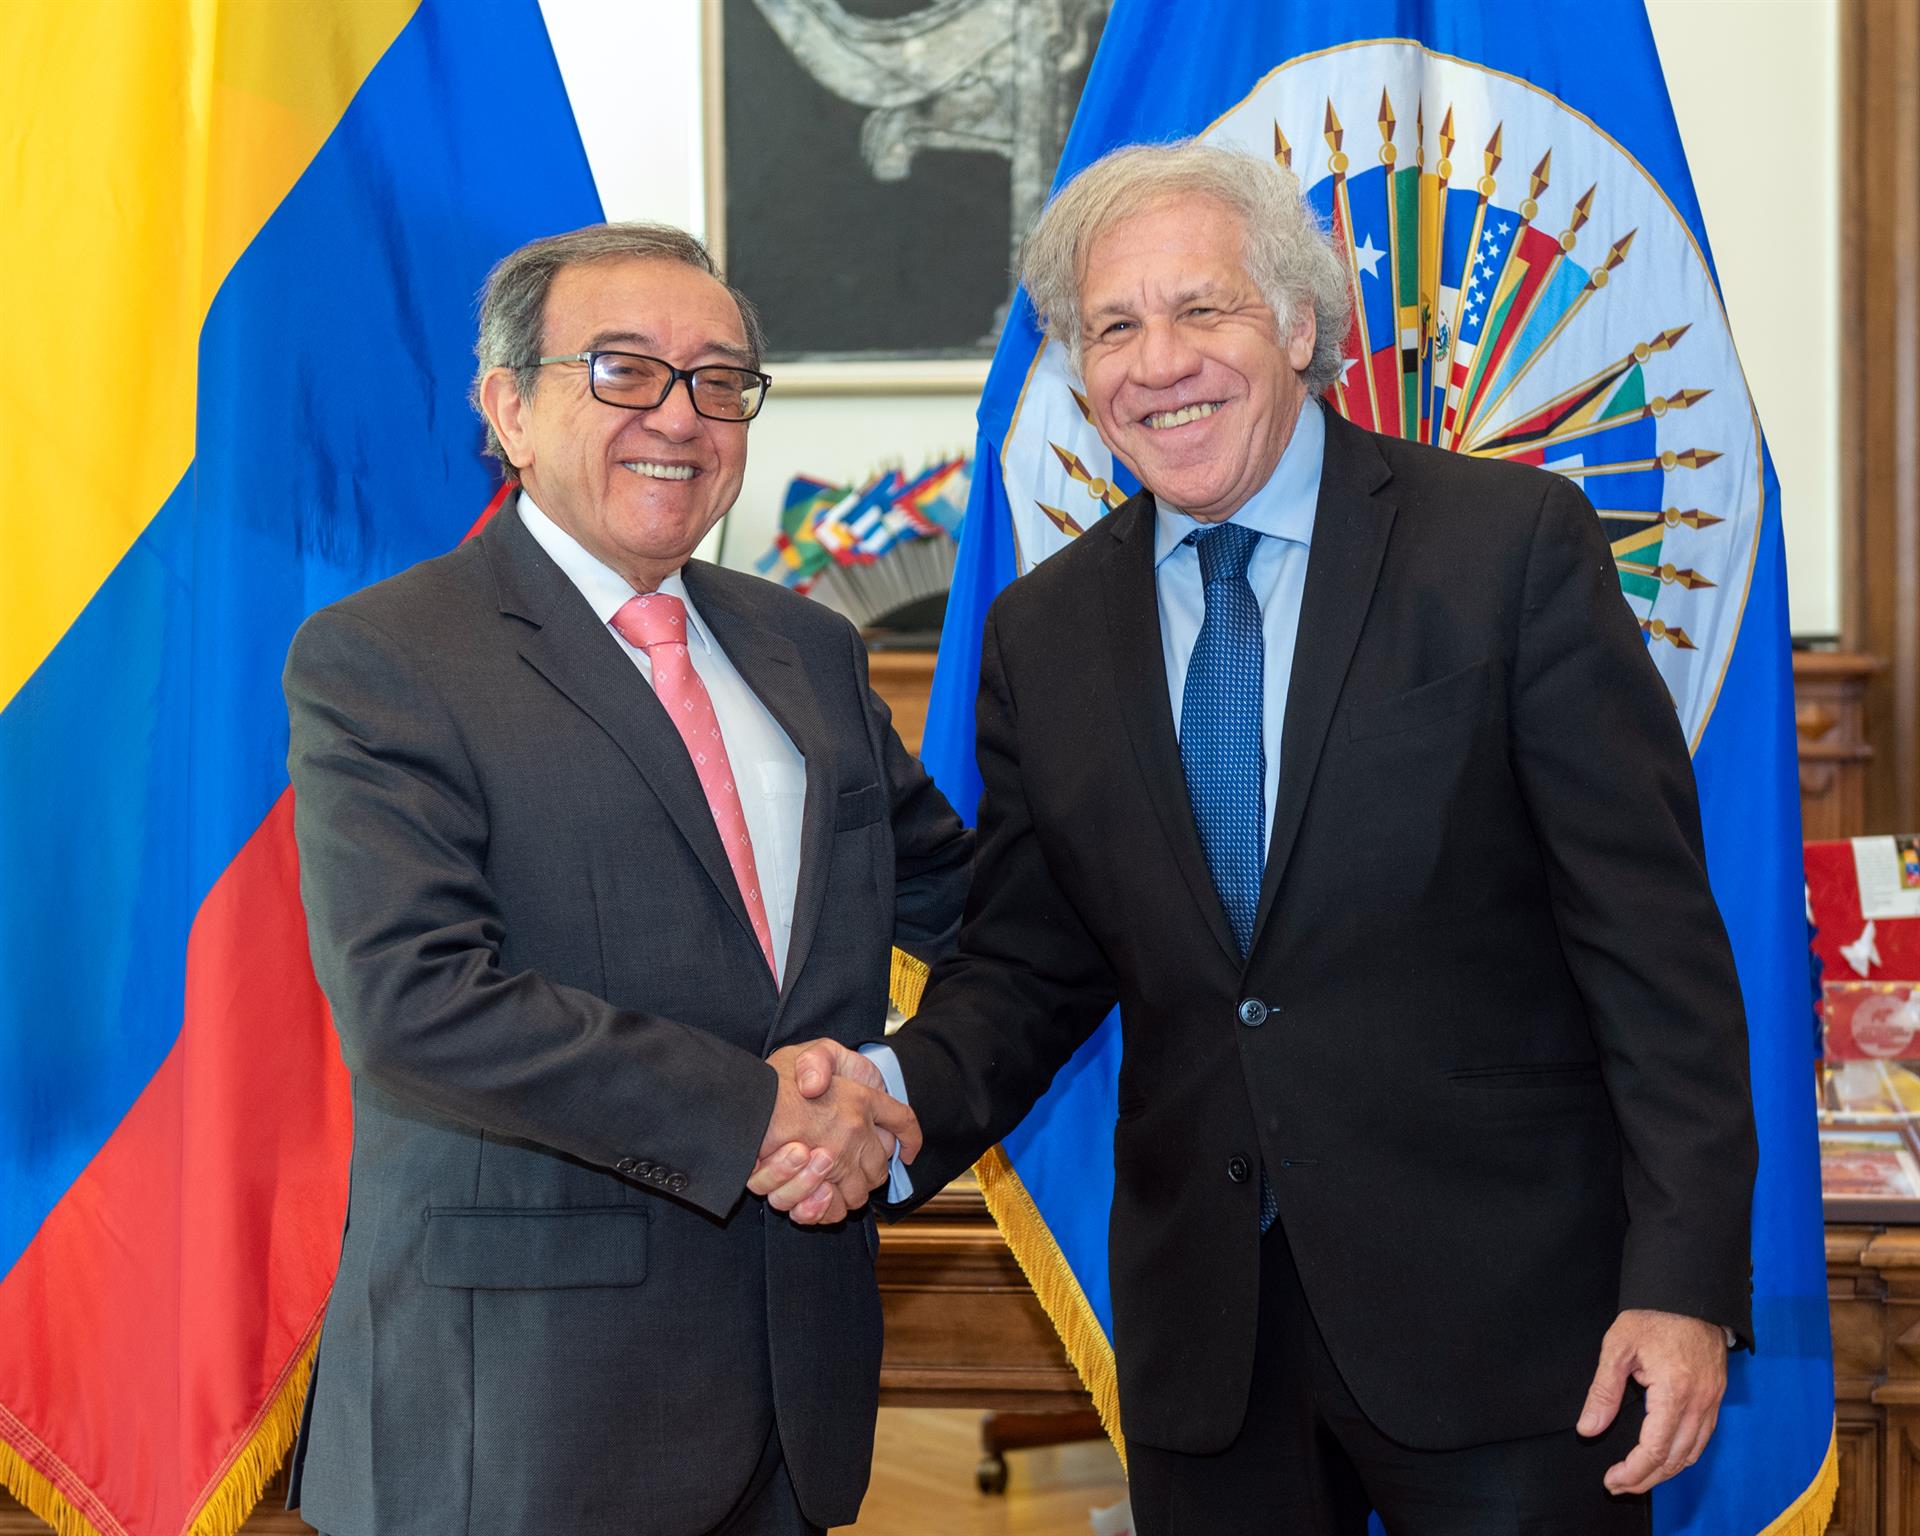 Representante de Colombia ante la OEA asume cargo tras polémica por Nicaragua